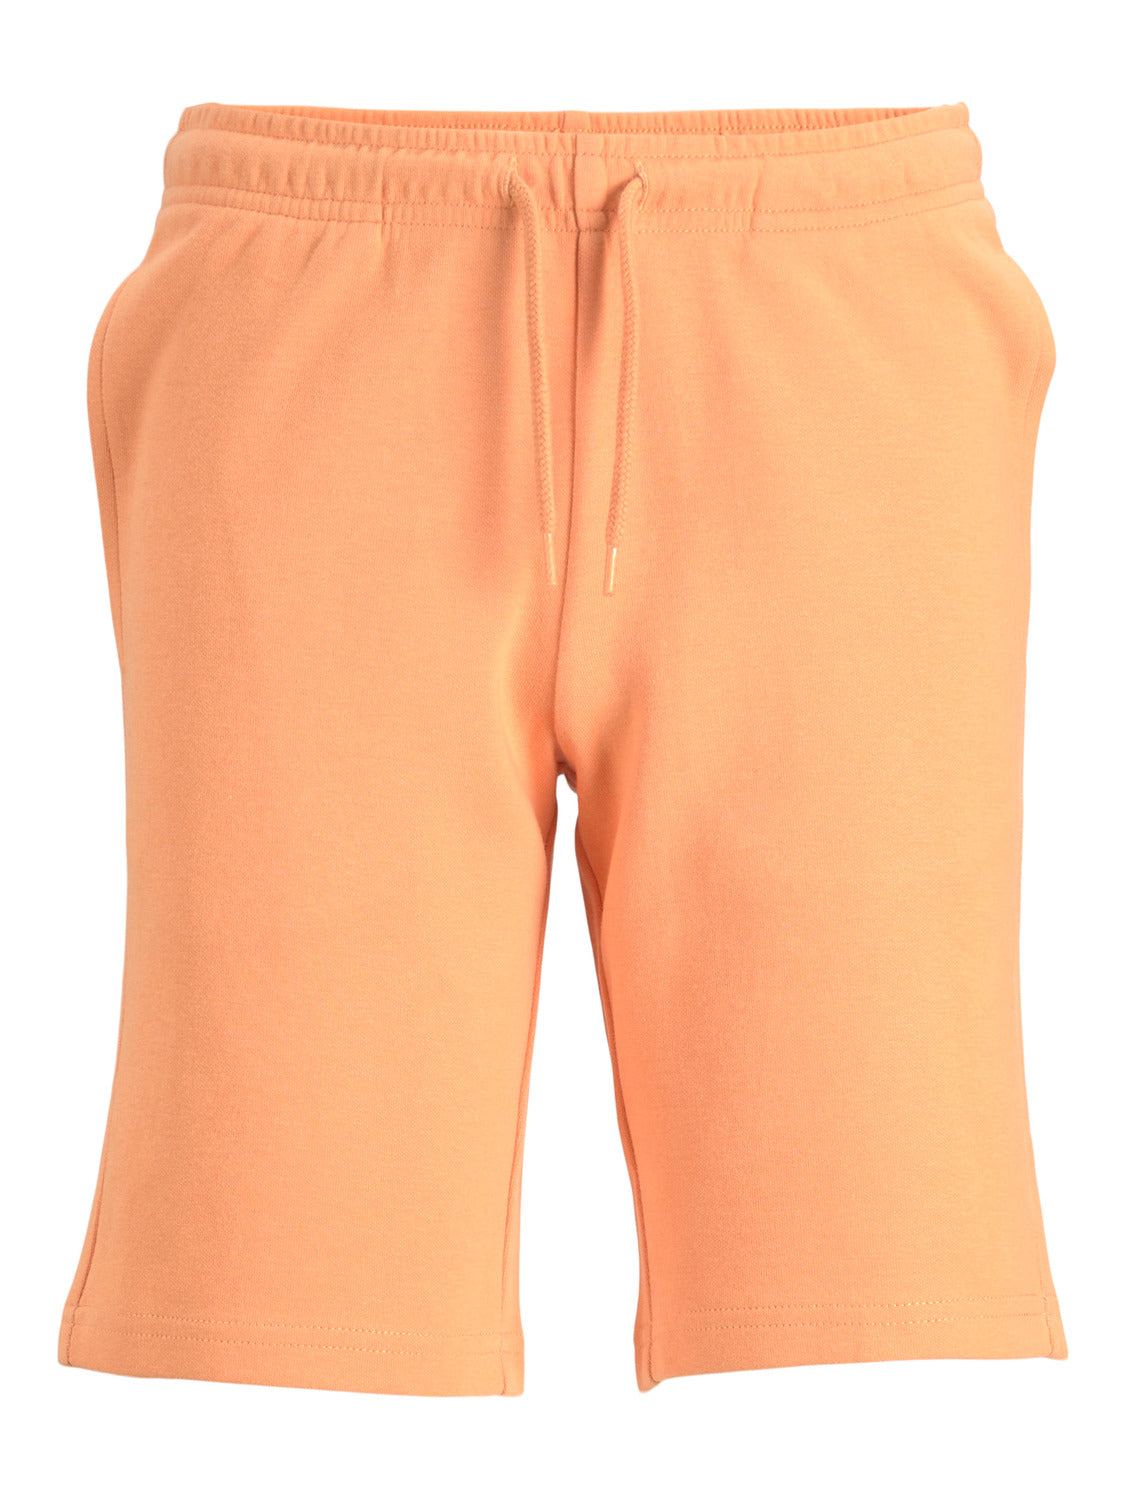 Pantalón corto de chándal JPSTBASIC - Naranja